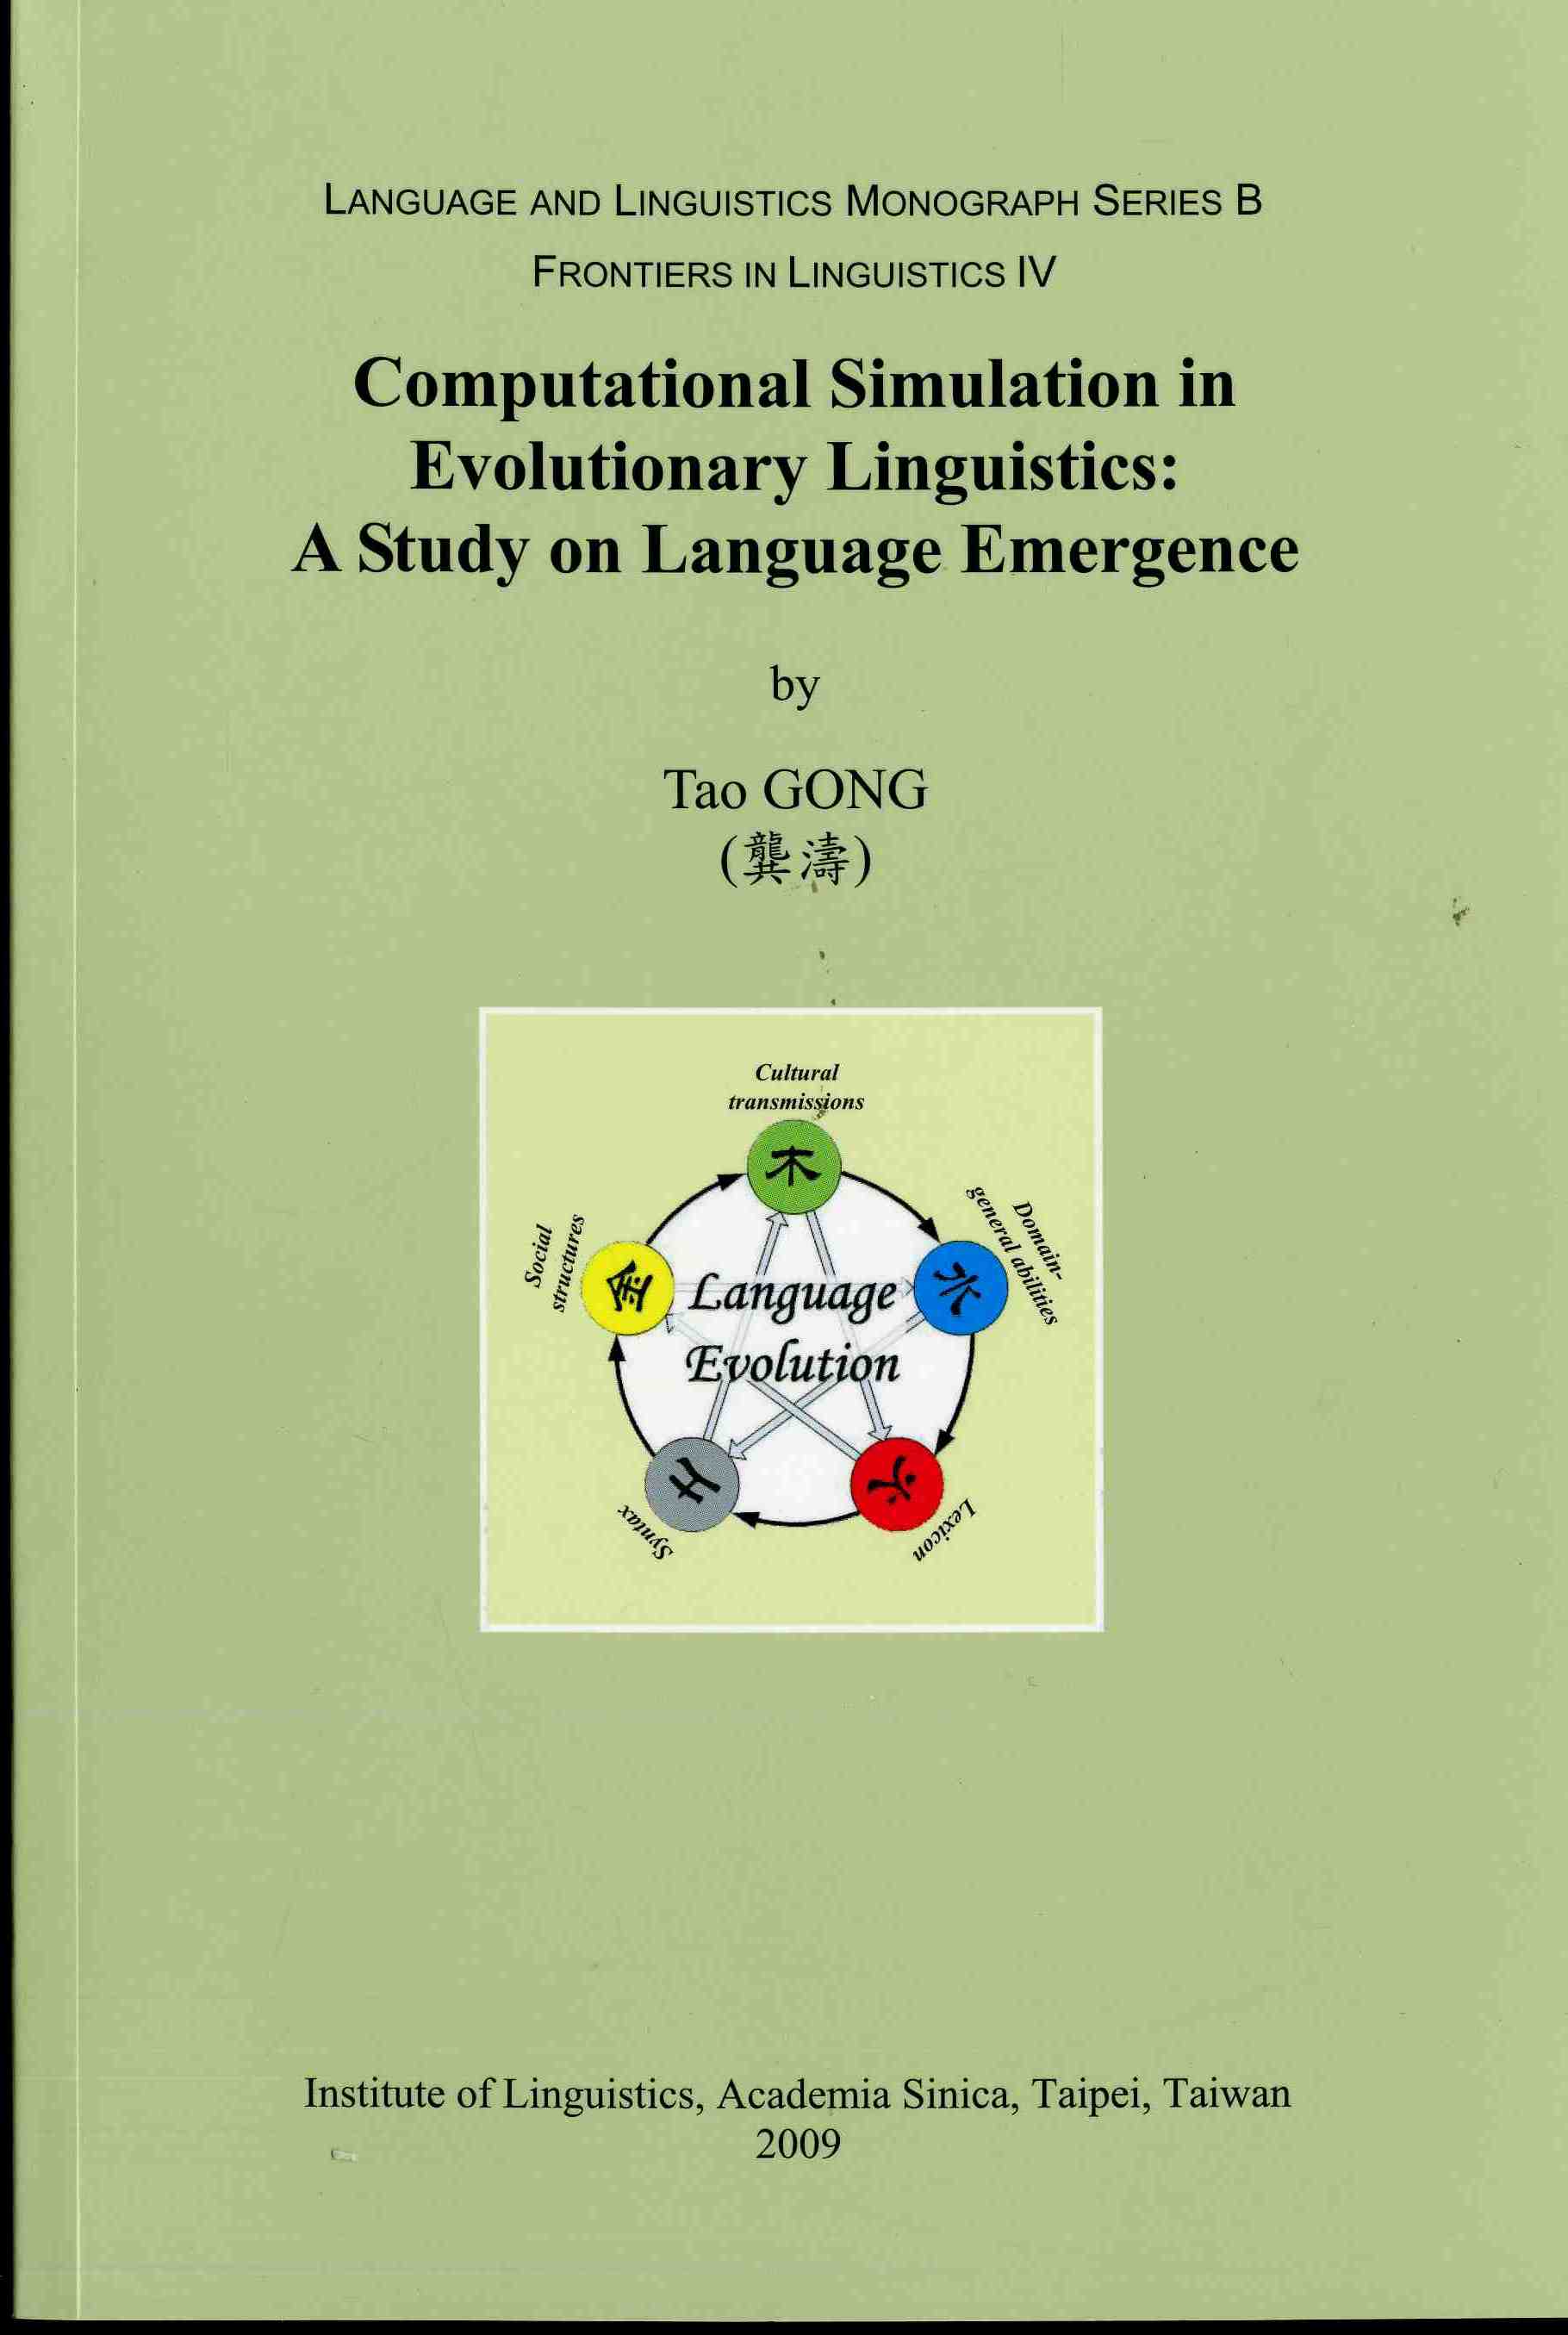 Computational Simulation in Evolutionary Linguistics: A Study on Language Emergence